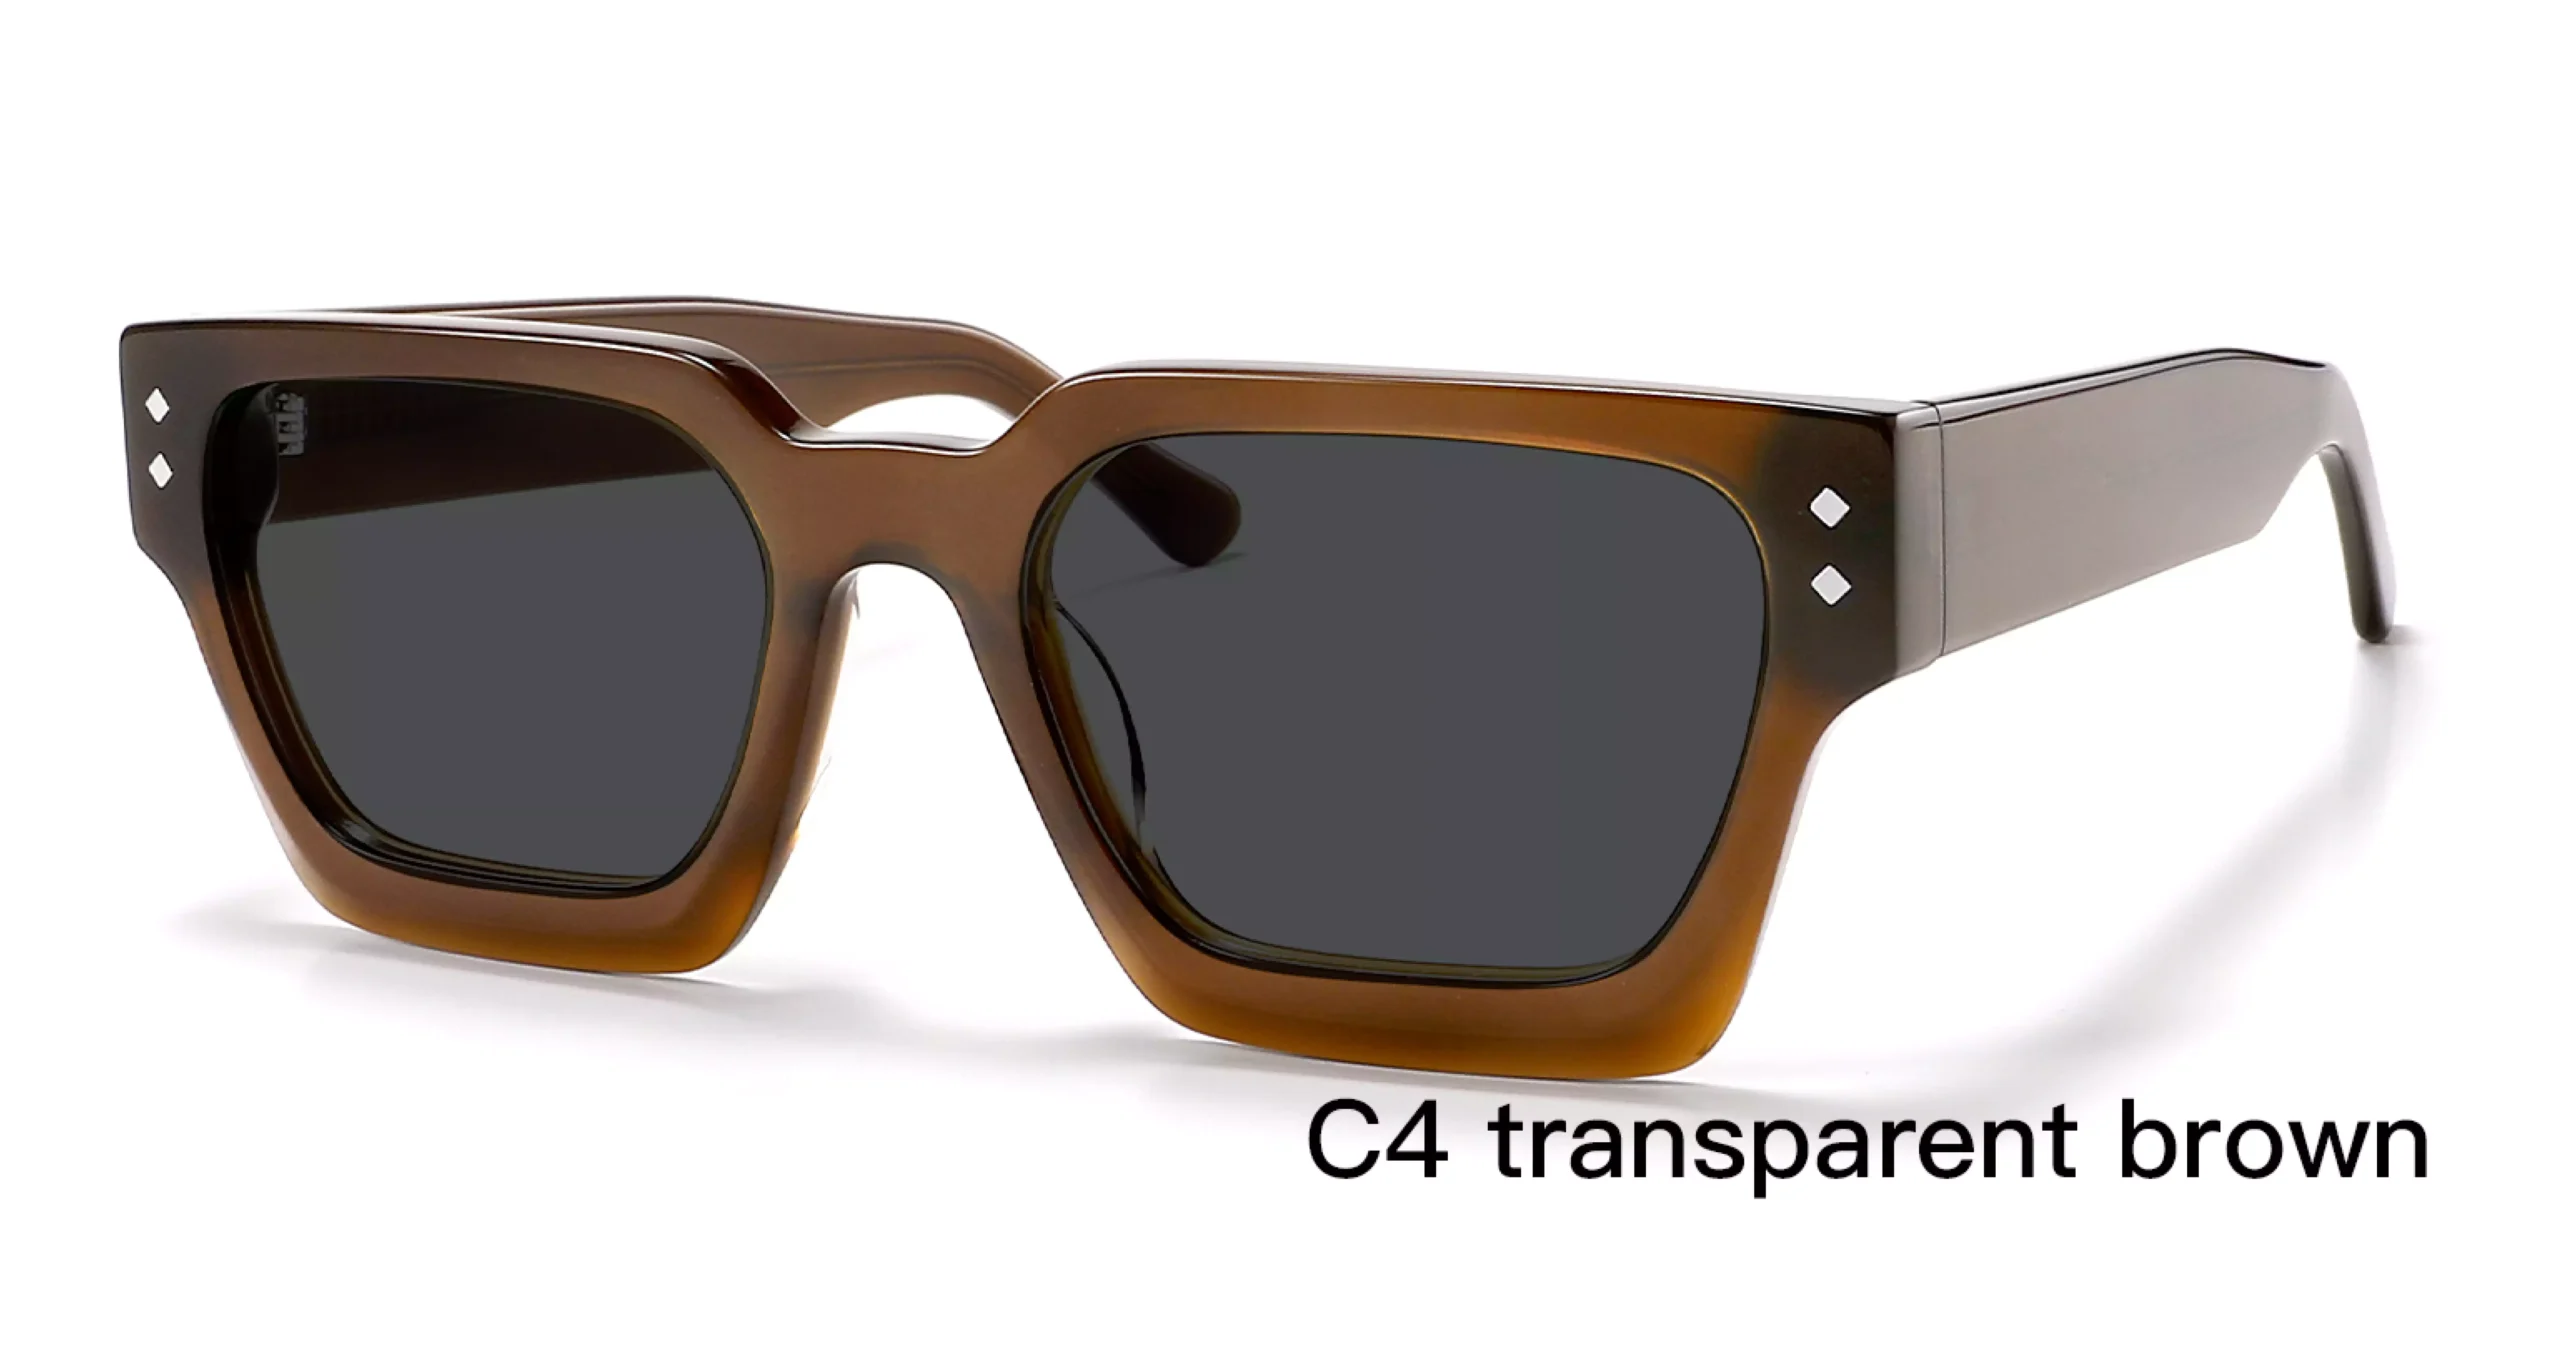 retro, square, sunglasses, fall winter series, transparent brown, thick temple, diamond rivets, wholesale